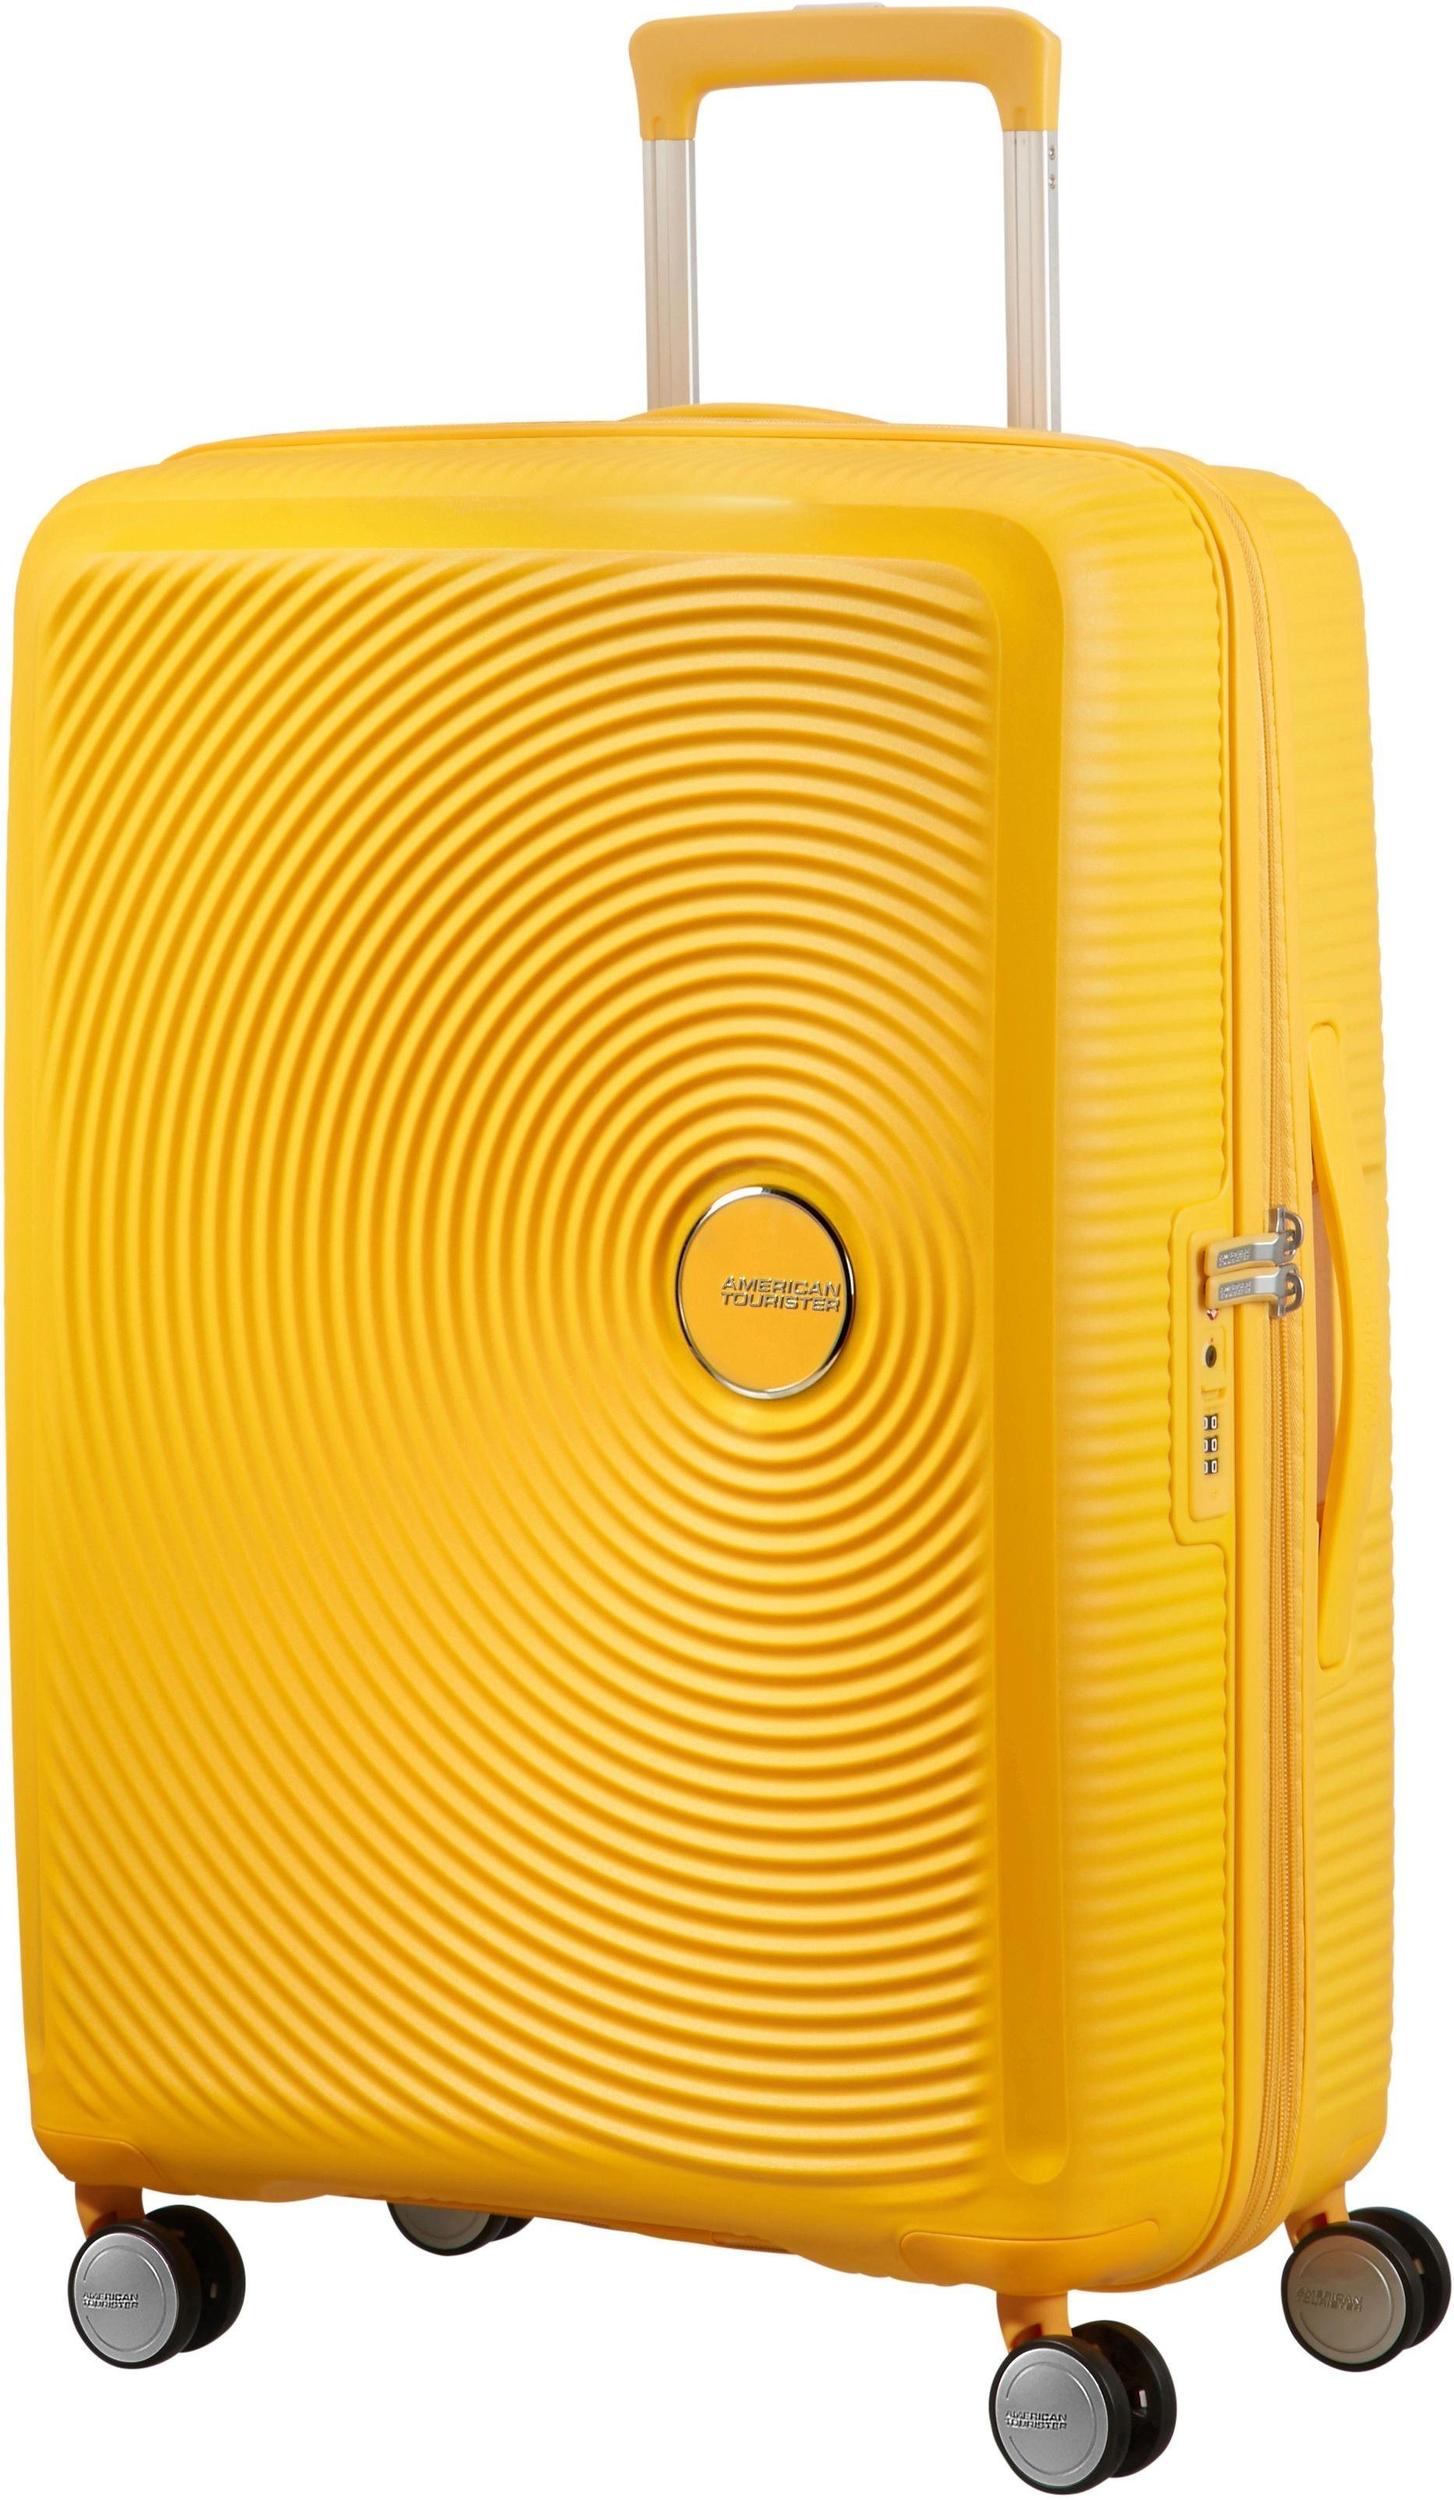 American Tourister 112,00 cm ab yellow 4-Rollen-Trolley Test 67 golden Soundbox € 